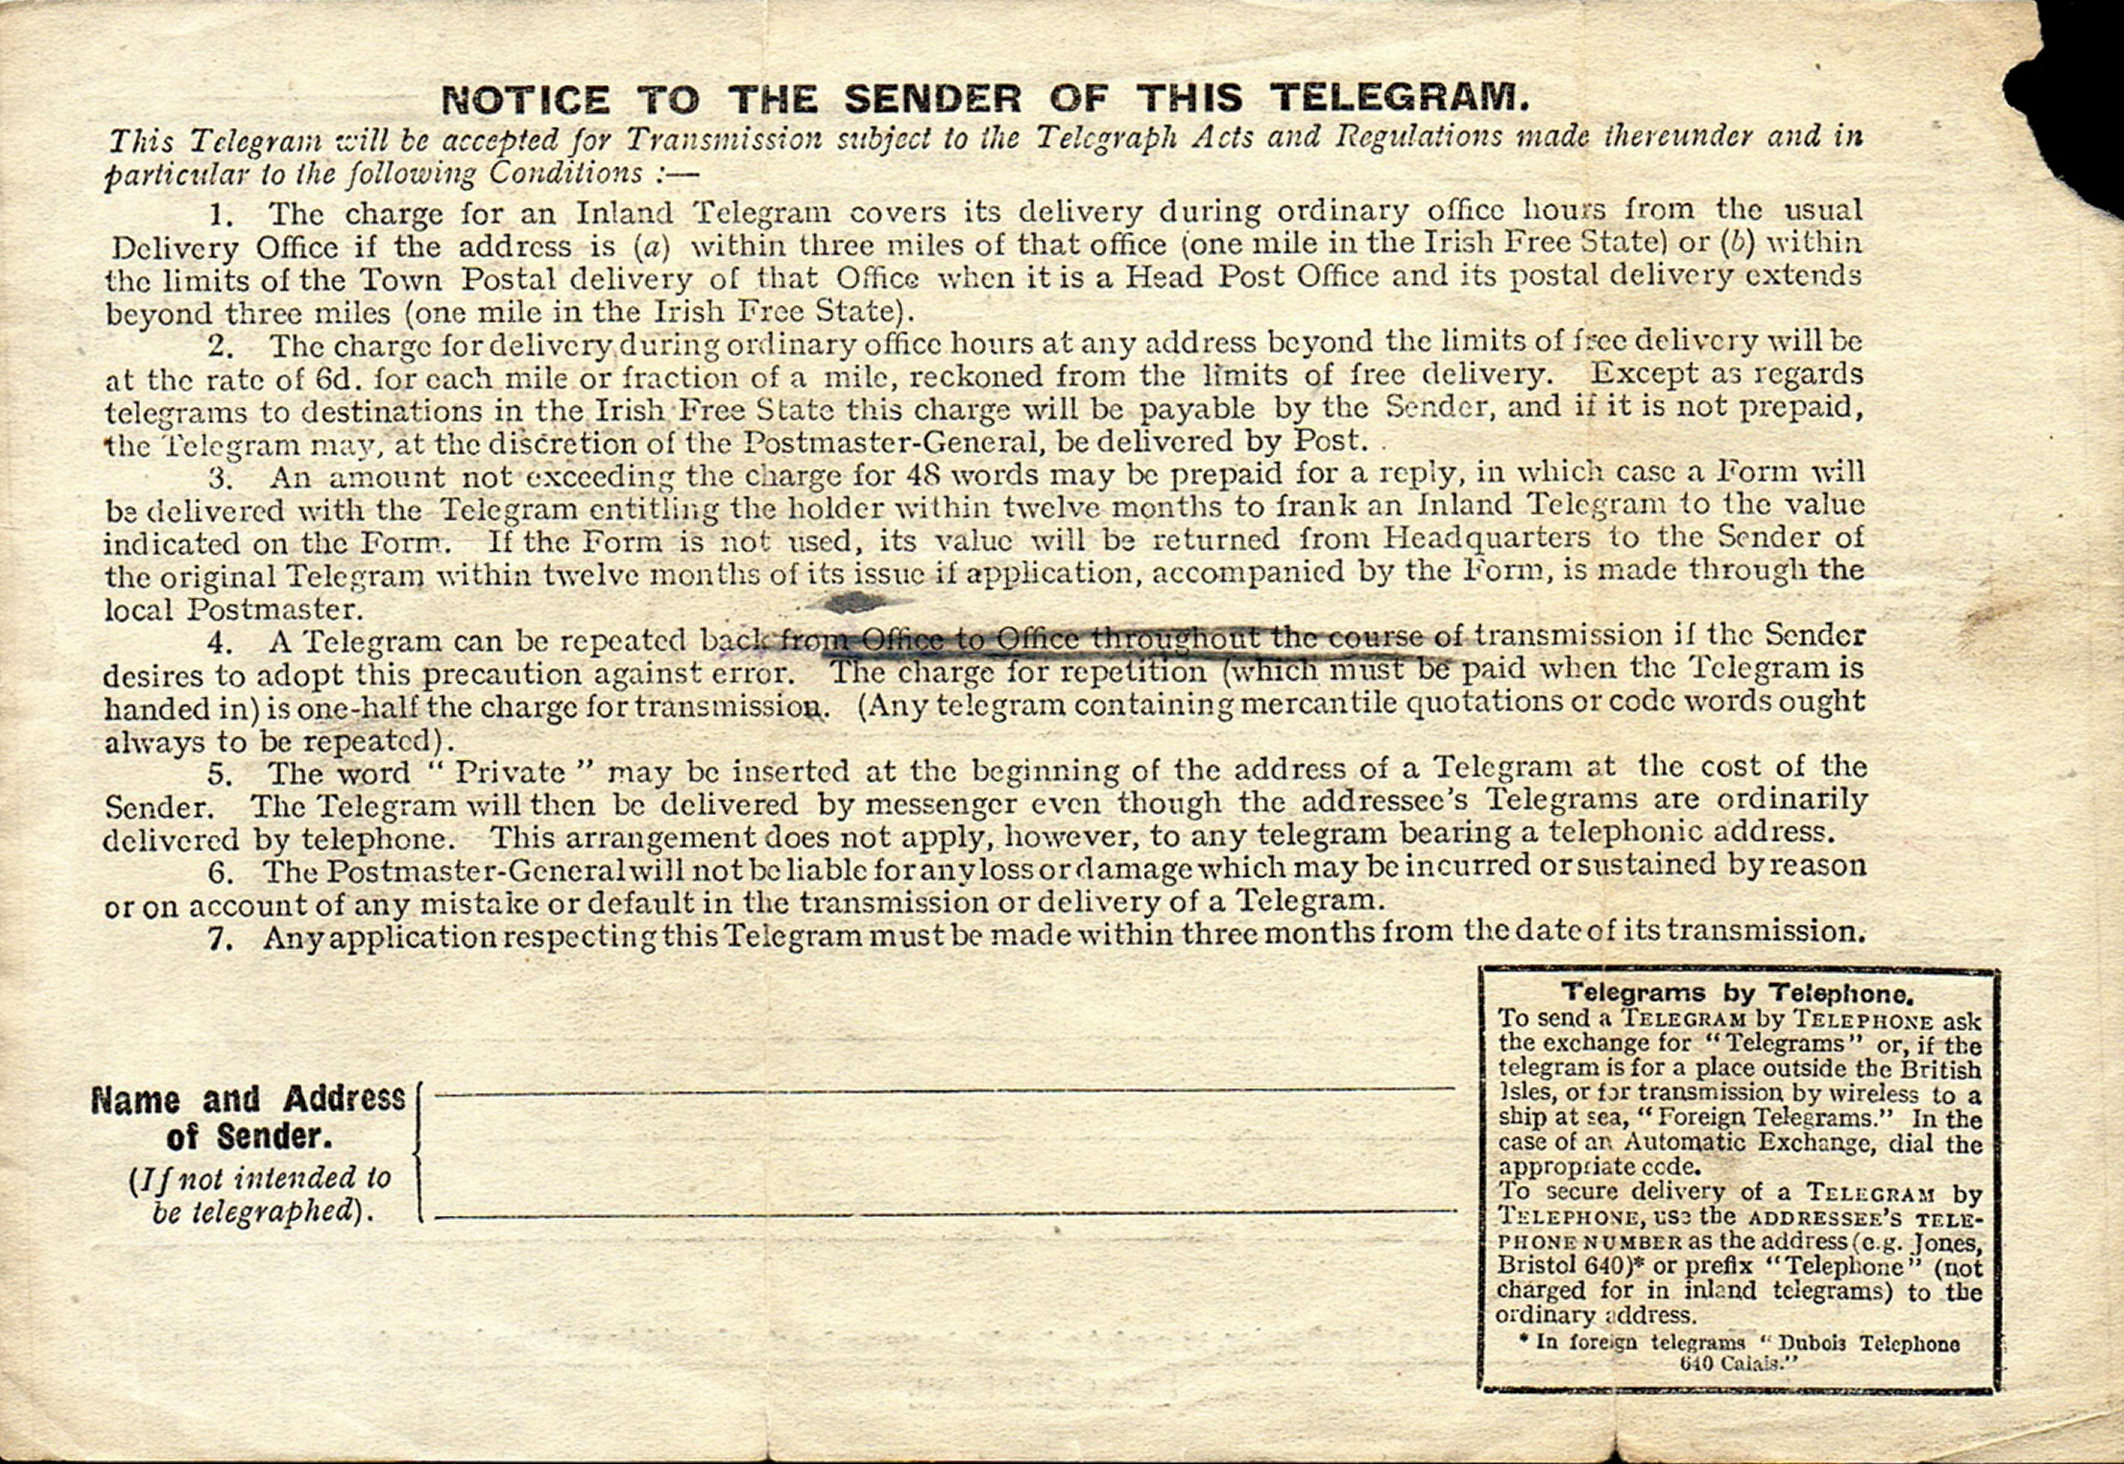 PO Telegraph Form - 1934 ? - back